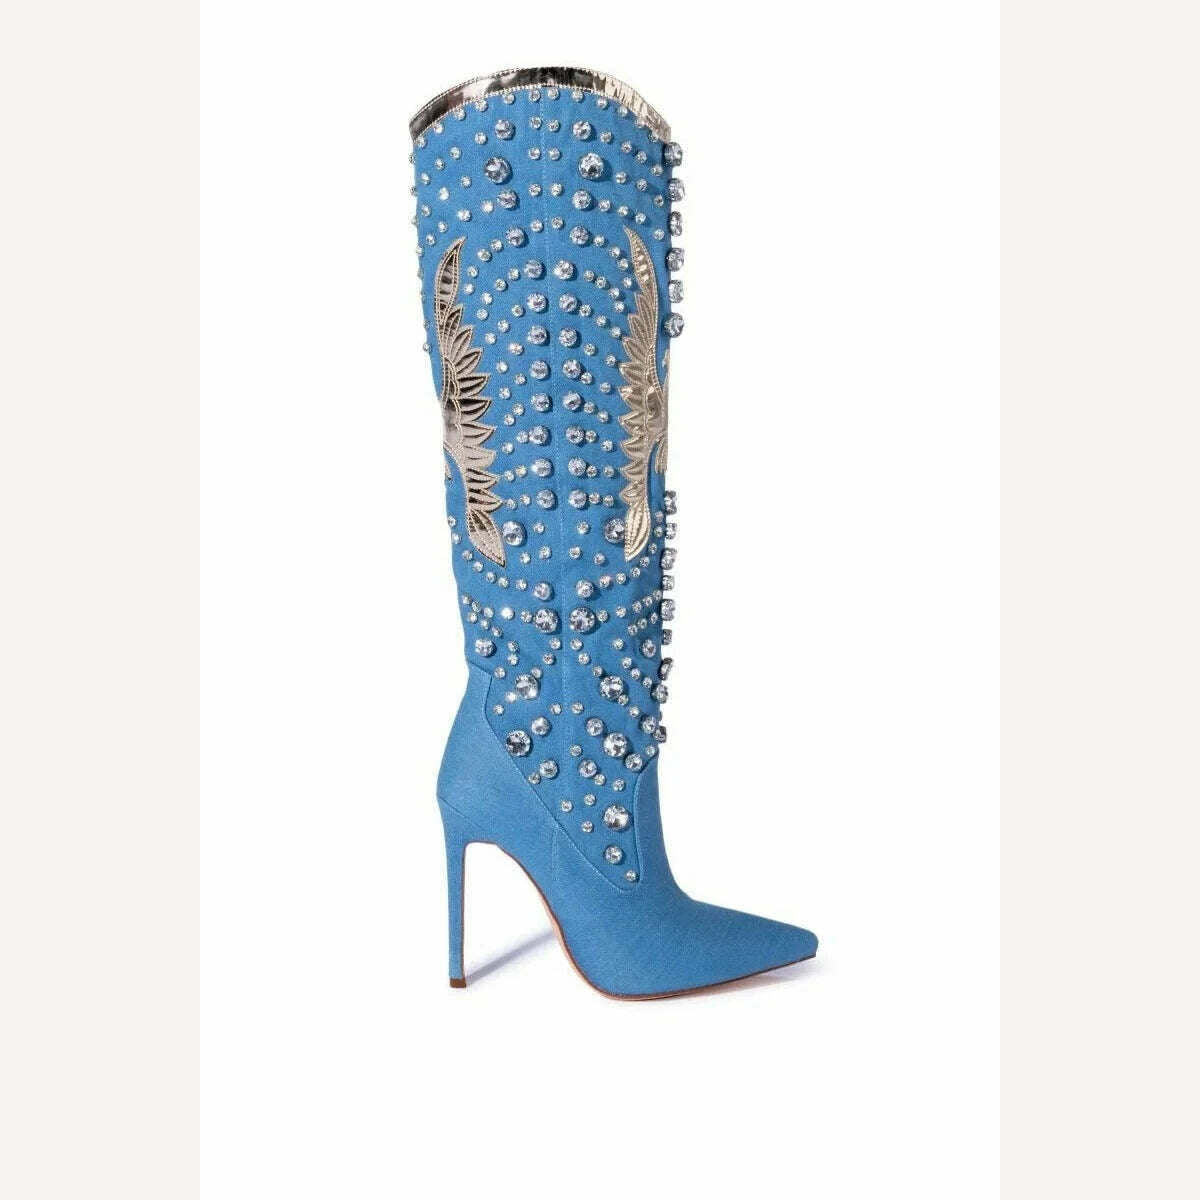 KIMLUD, Women Luxury Crystal Cowboy Boots Blue Denim Pointed Toe Glitter Knee High Boots High Heels Zipper Big Size Designer Shoes, KIMLUD Women's Clothes